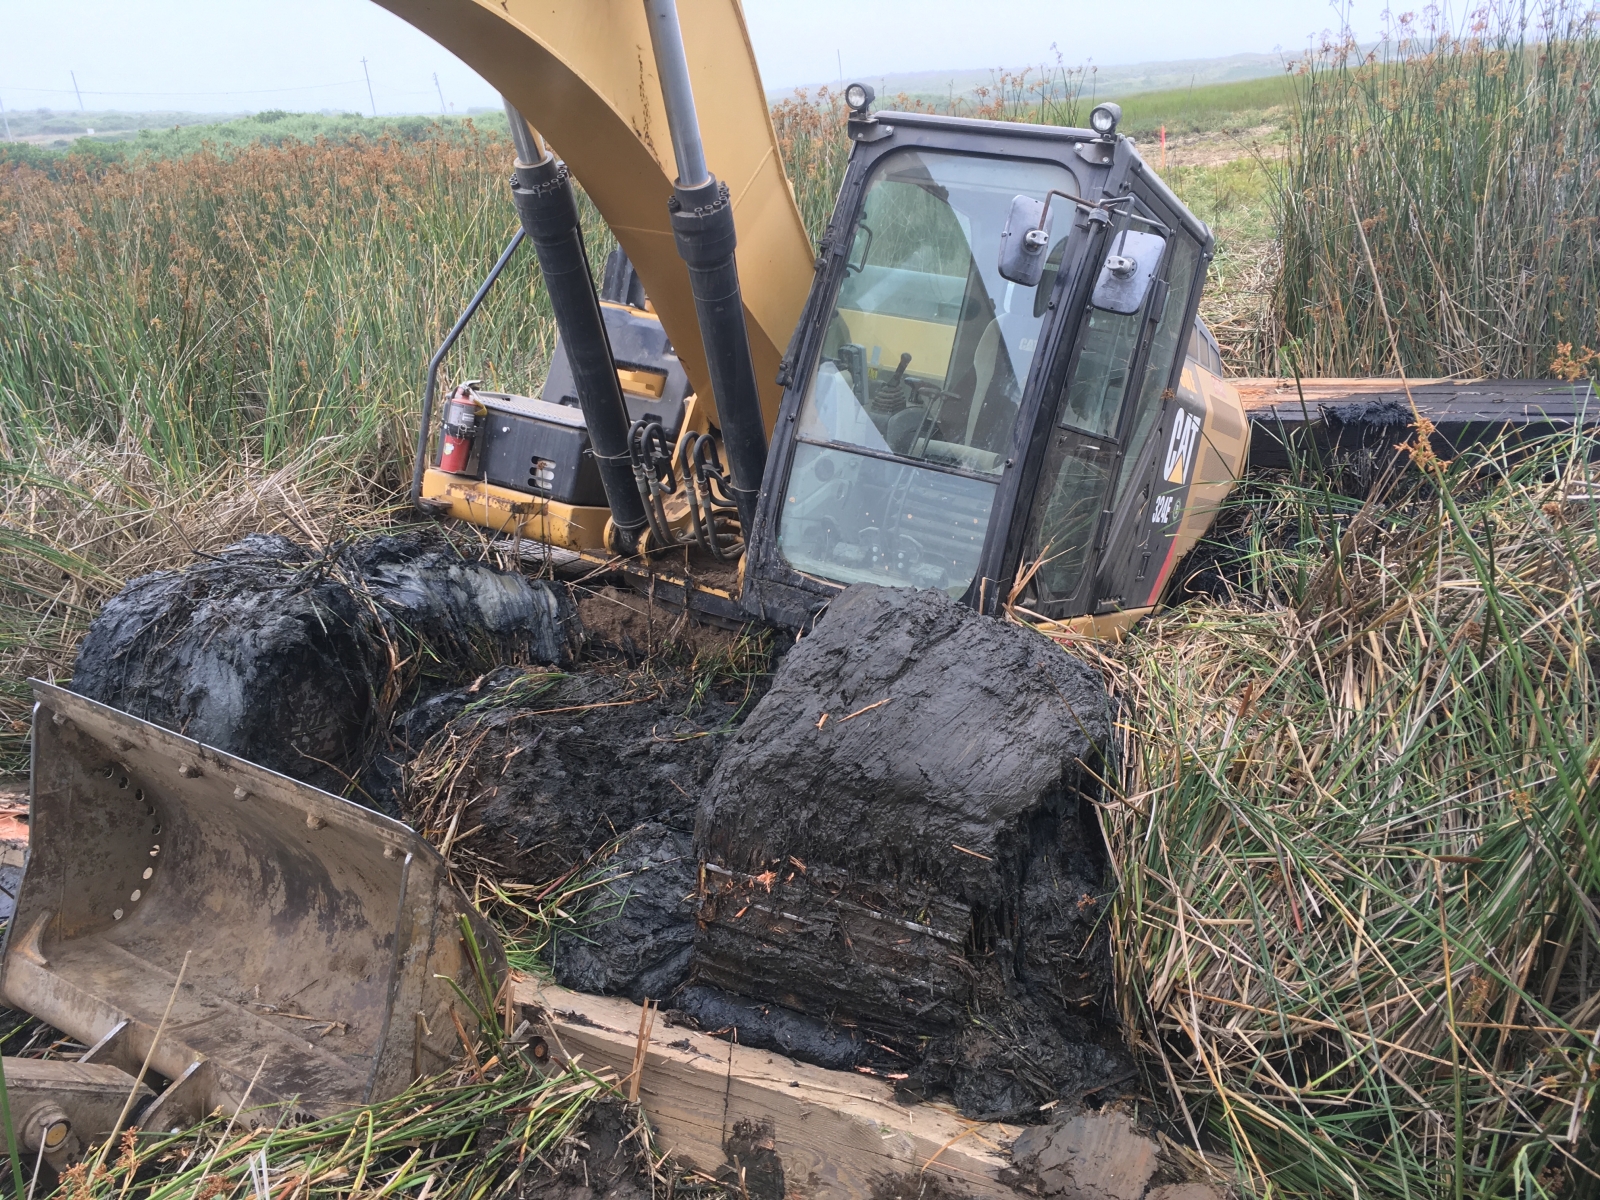 Excavator emerging from tules in Butano Marsh, July 2019